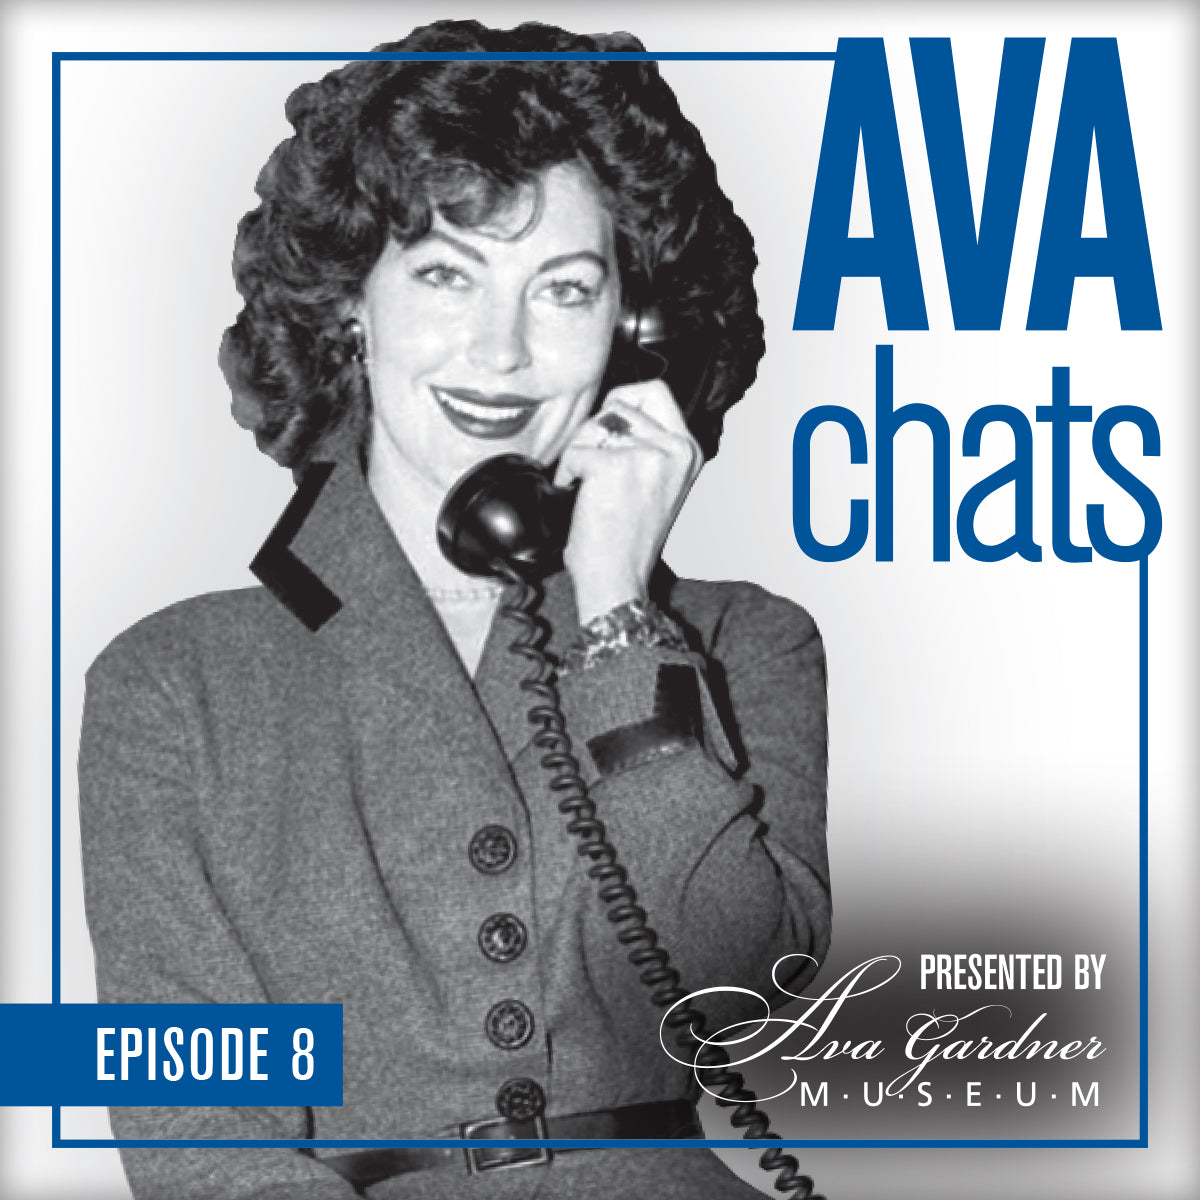 Ava Chats: In Conversation with Debi Mazar